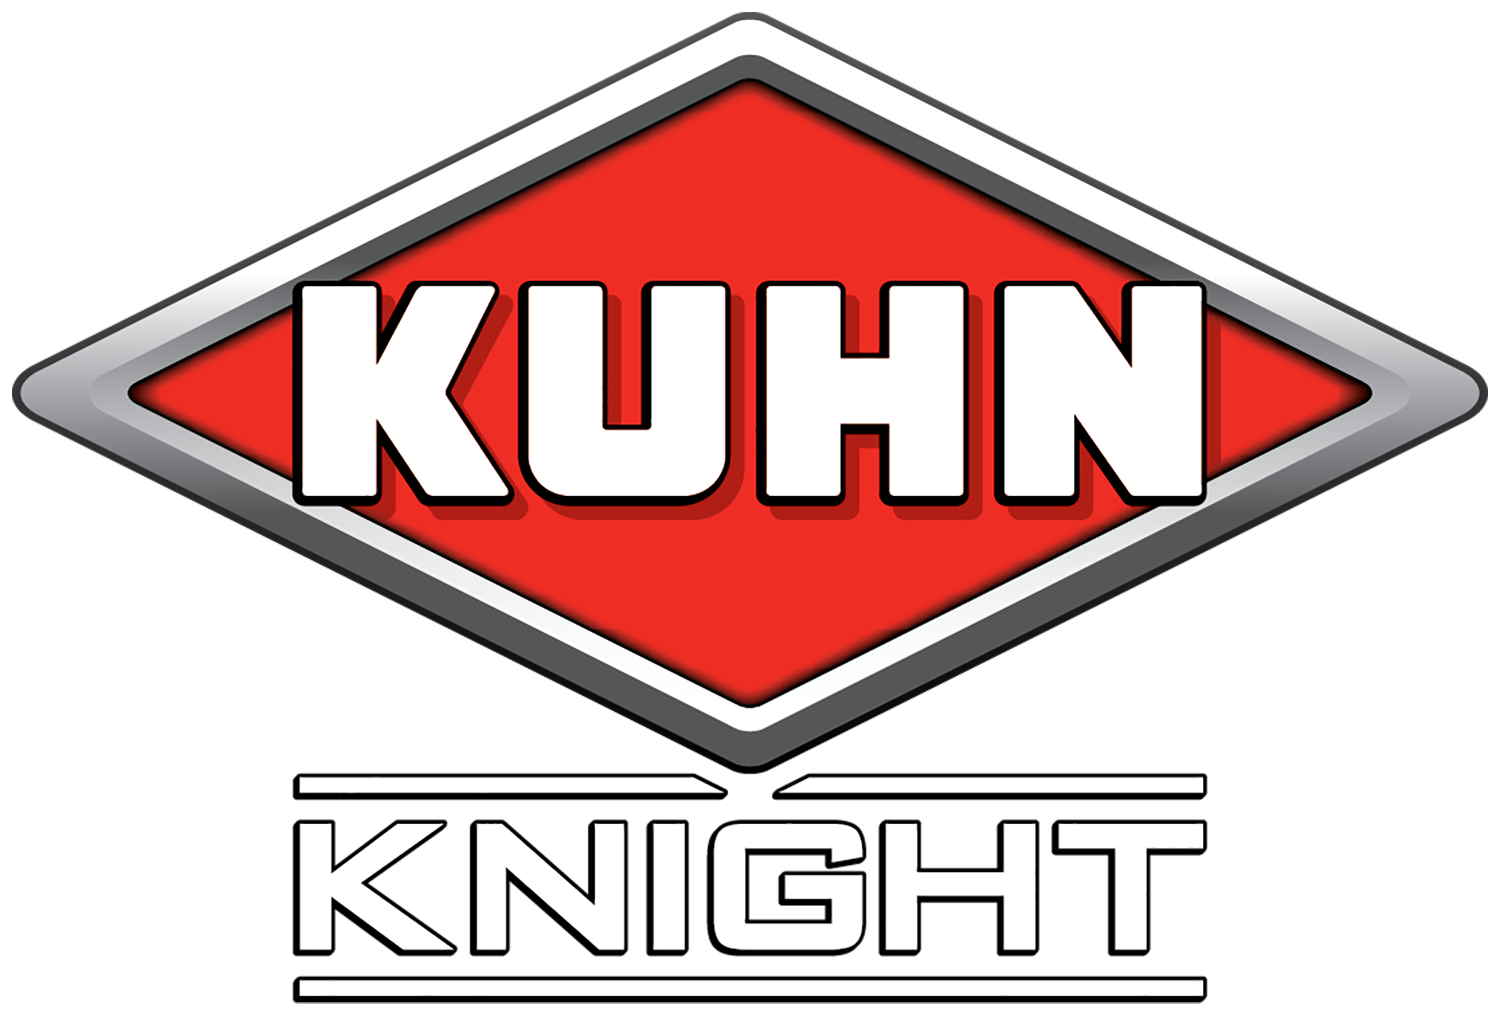 Kuhn Knight